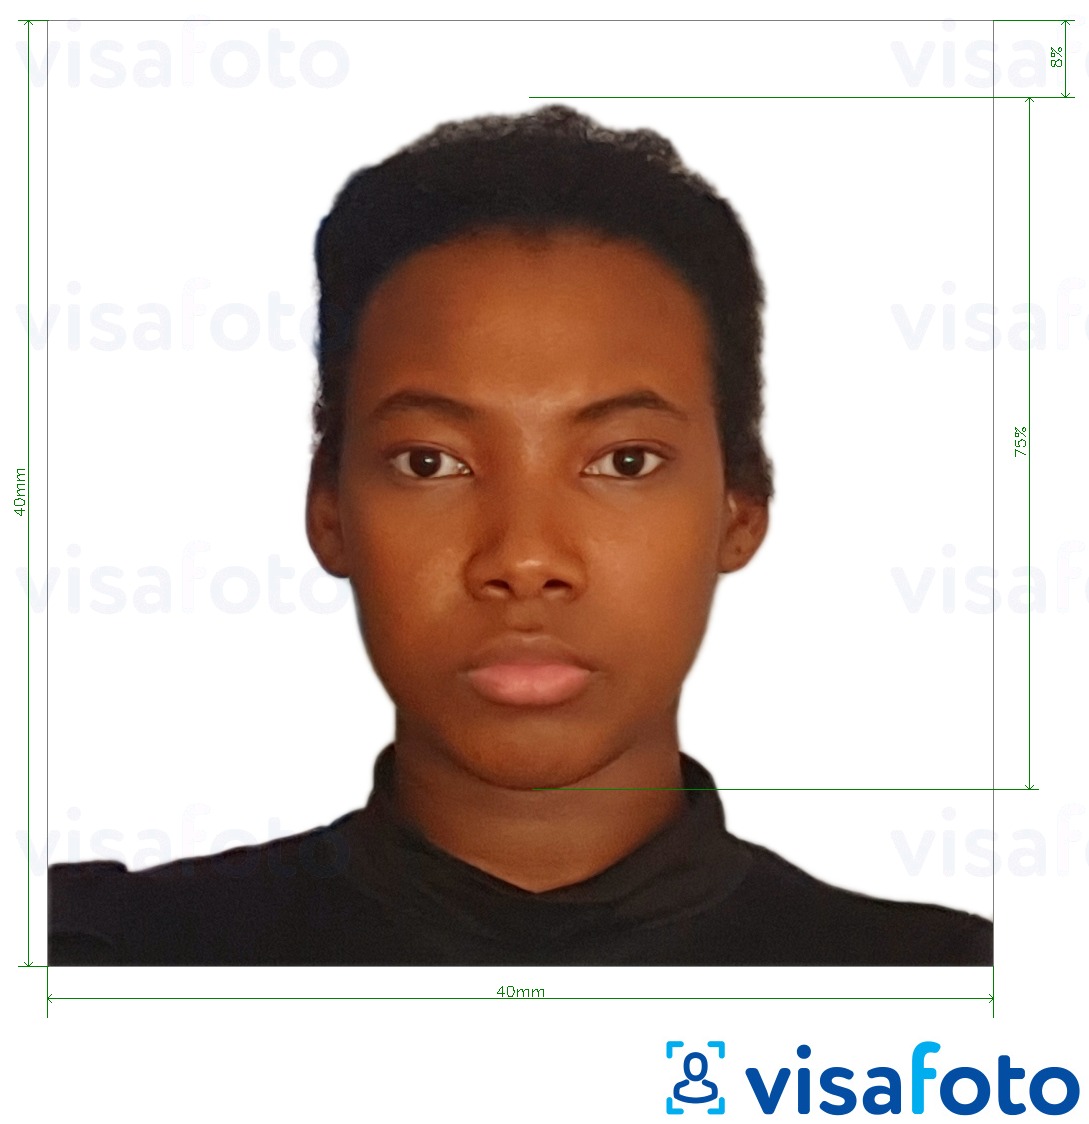 Cameroon visa photo